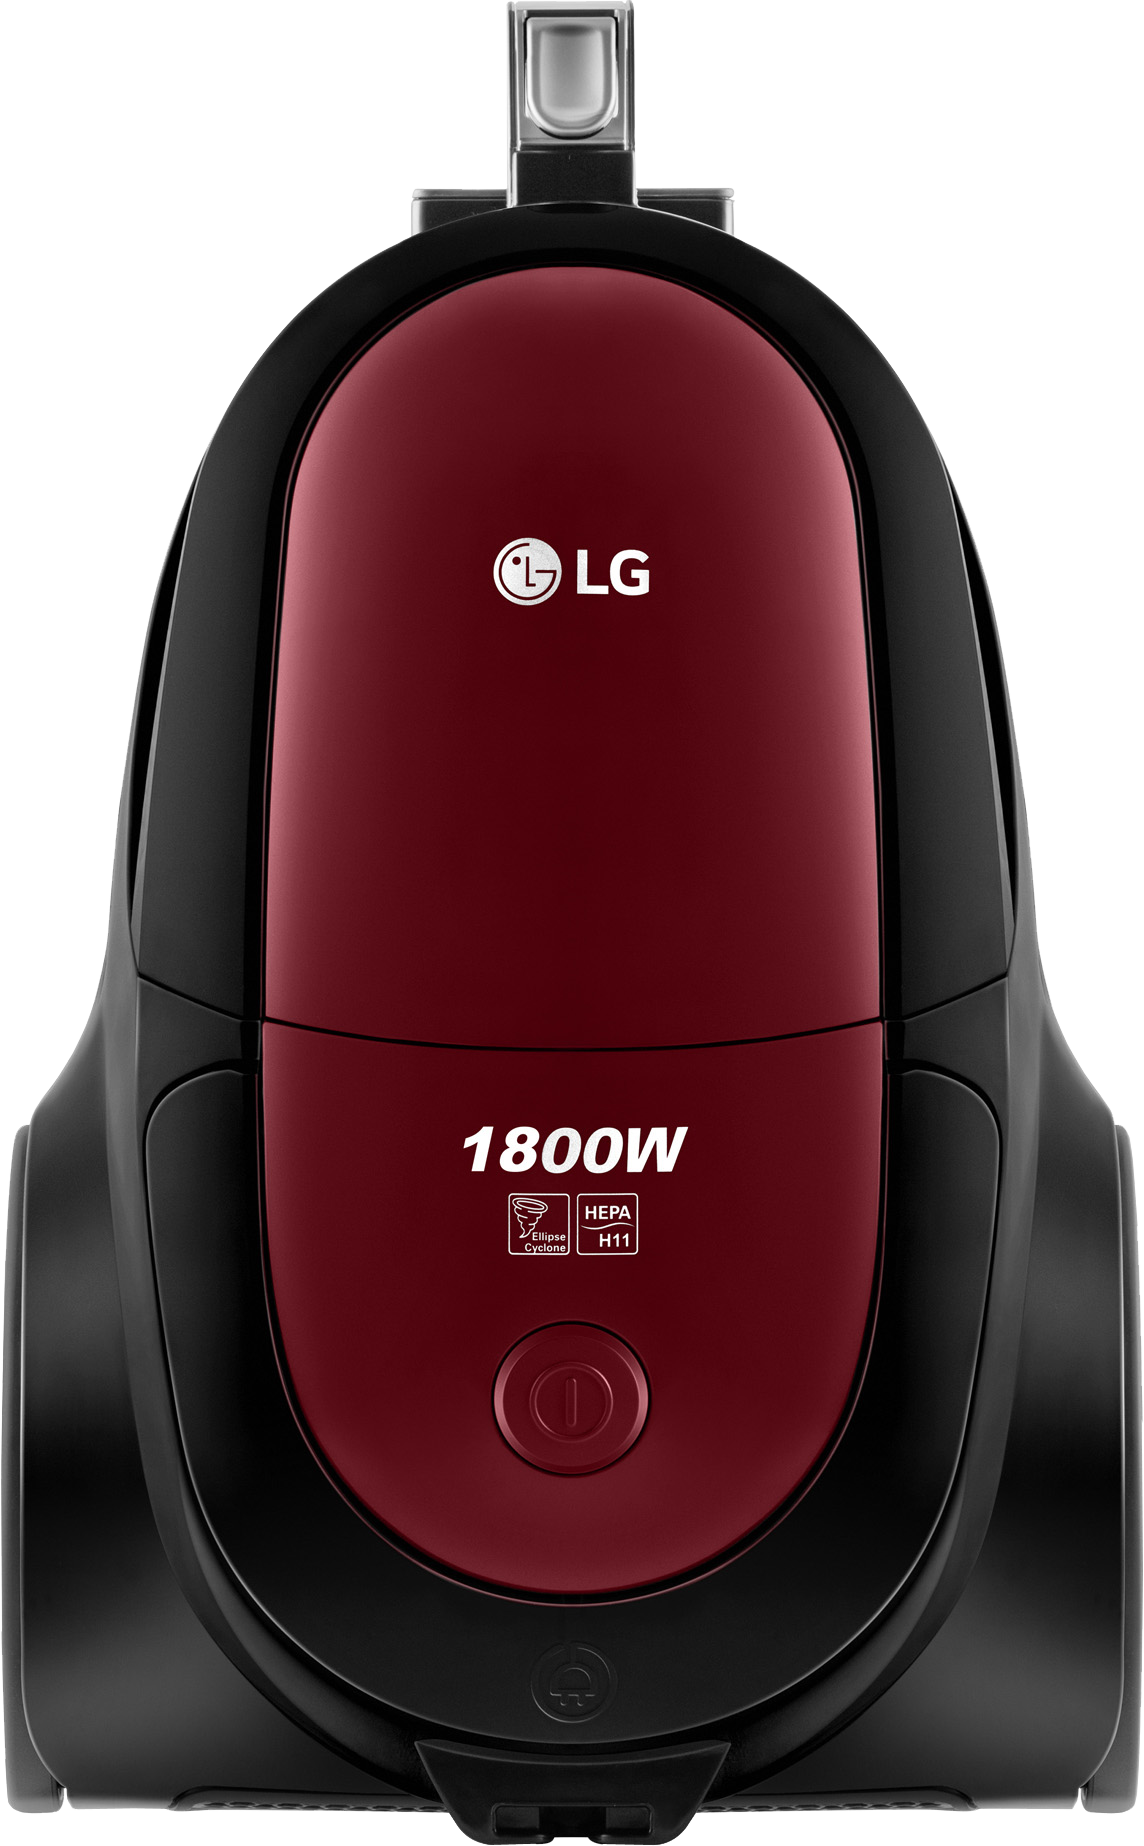 L G1800 W H E P A Vacuum Cleaner PNG